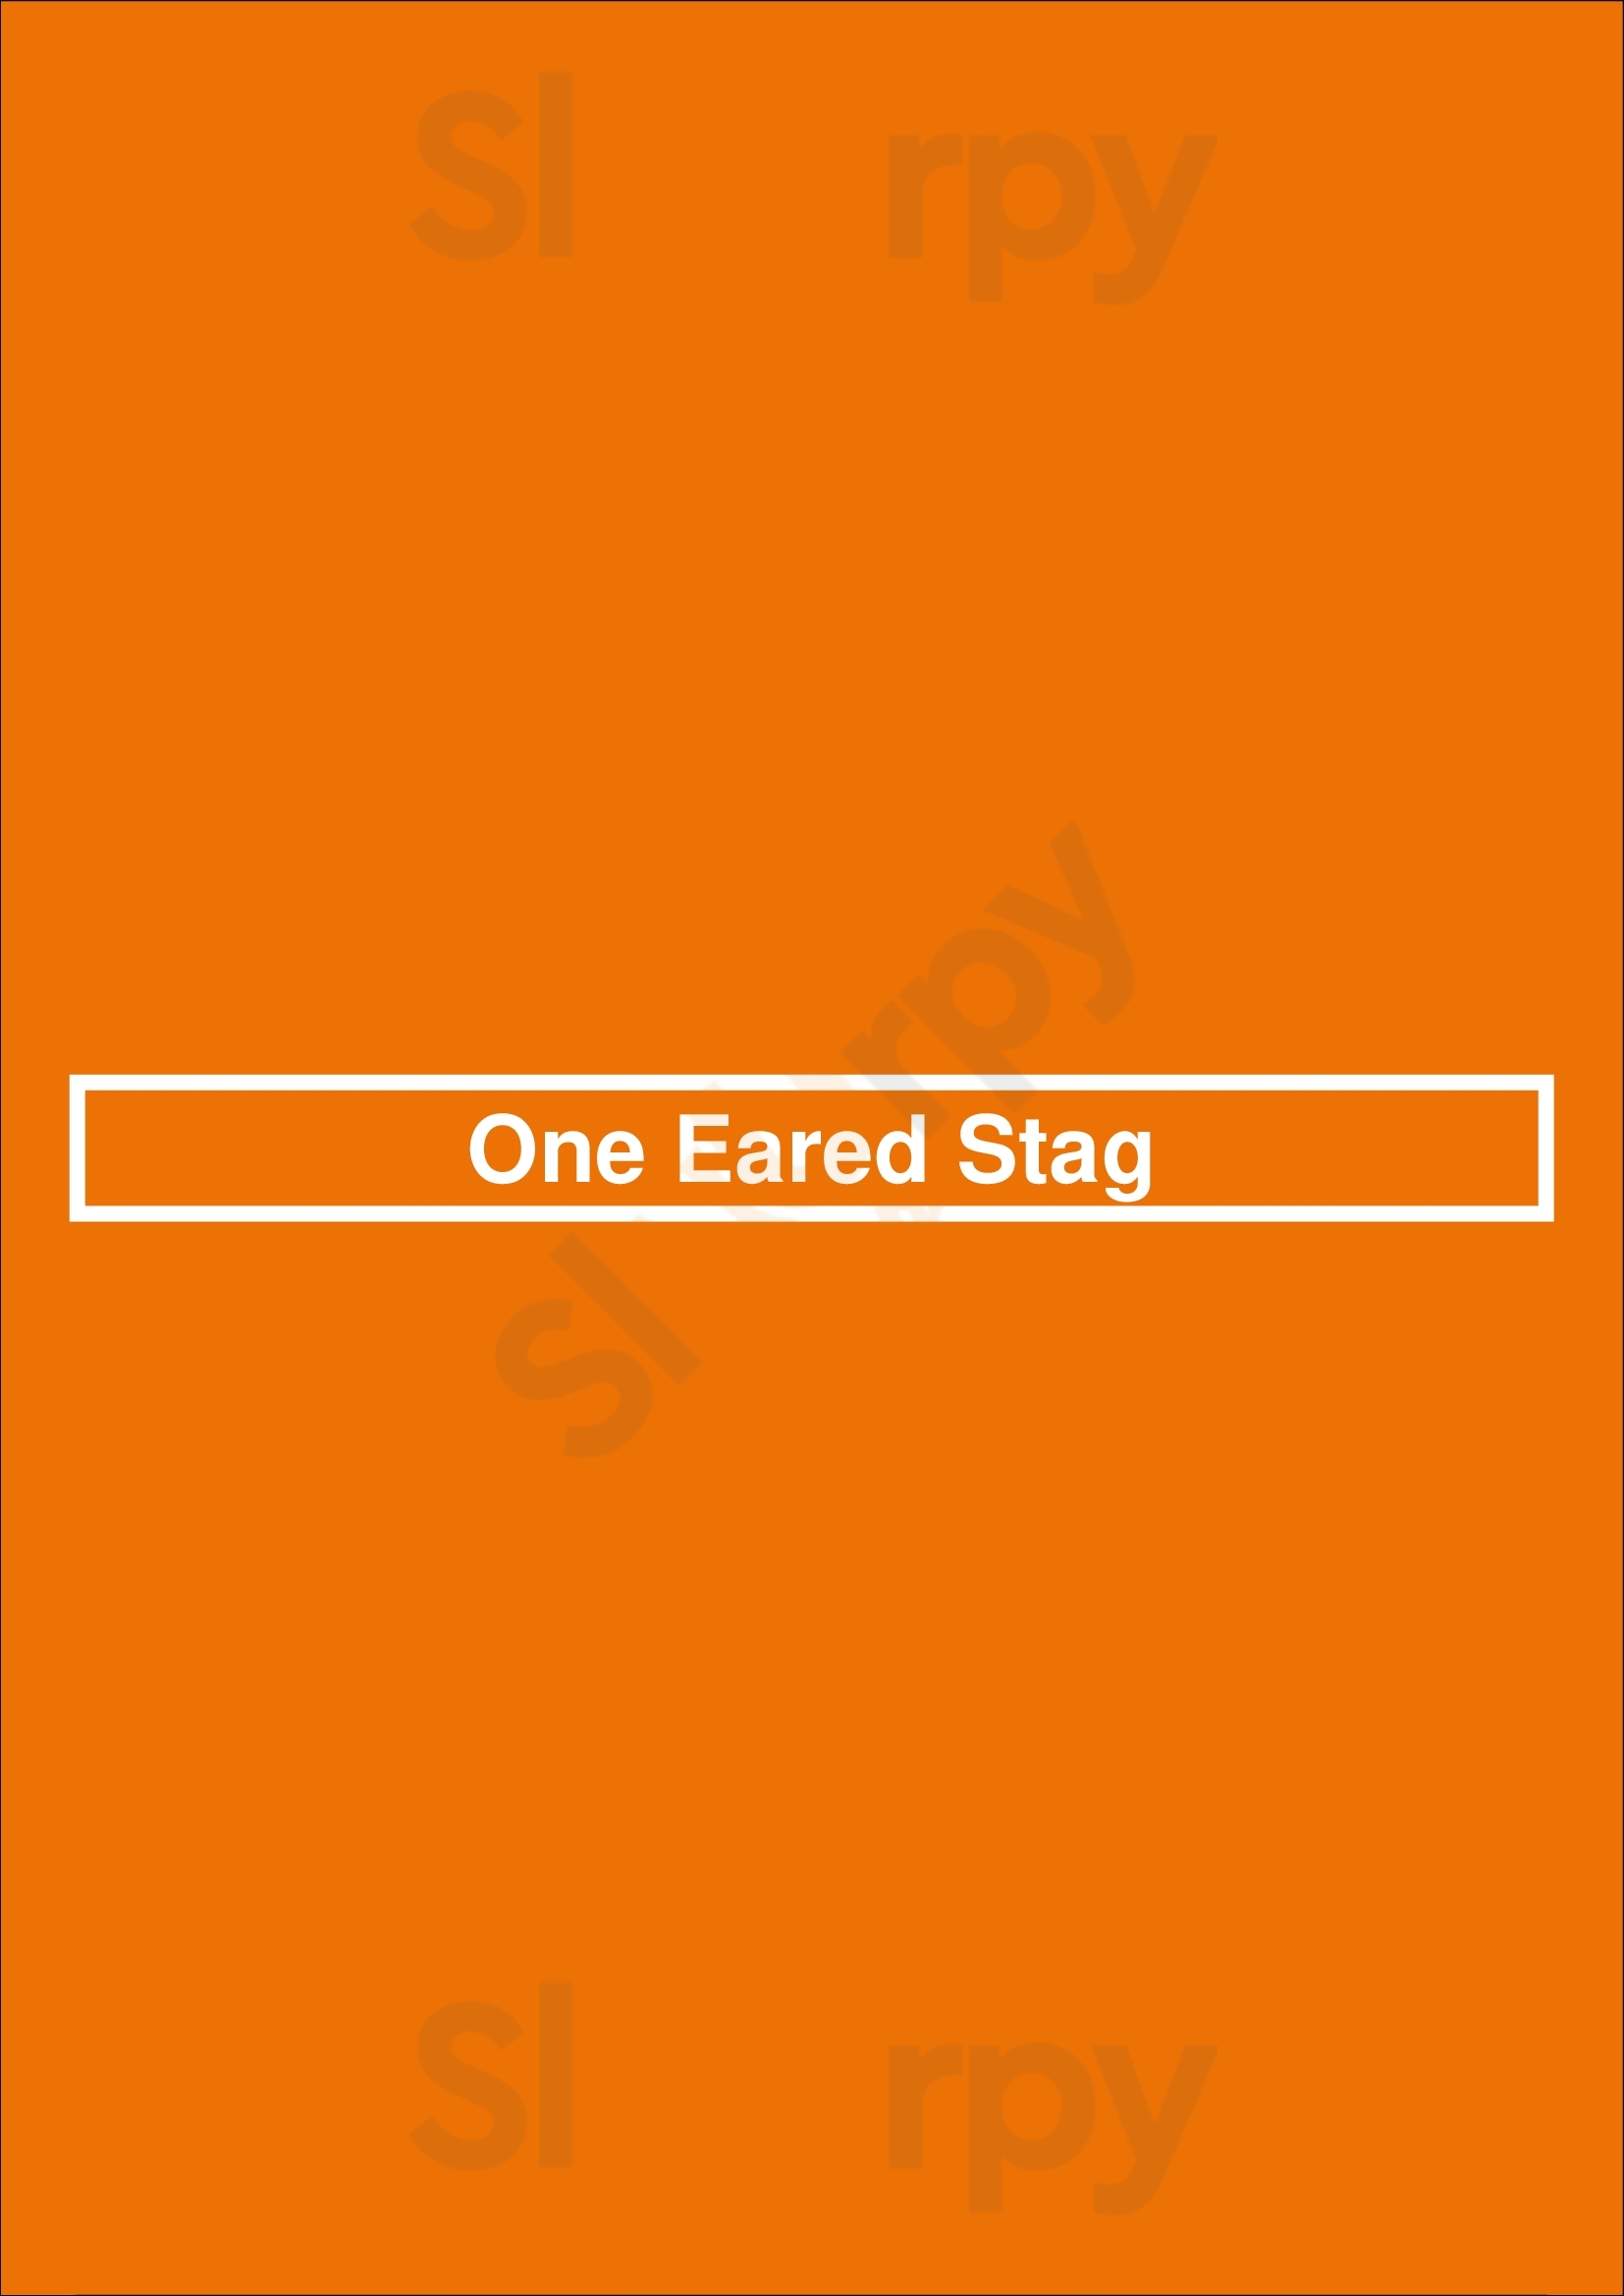 One Eared Stag Atlanta Menu - 1